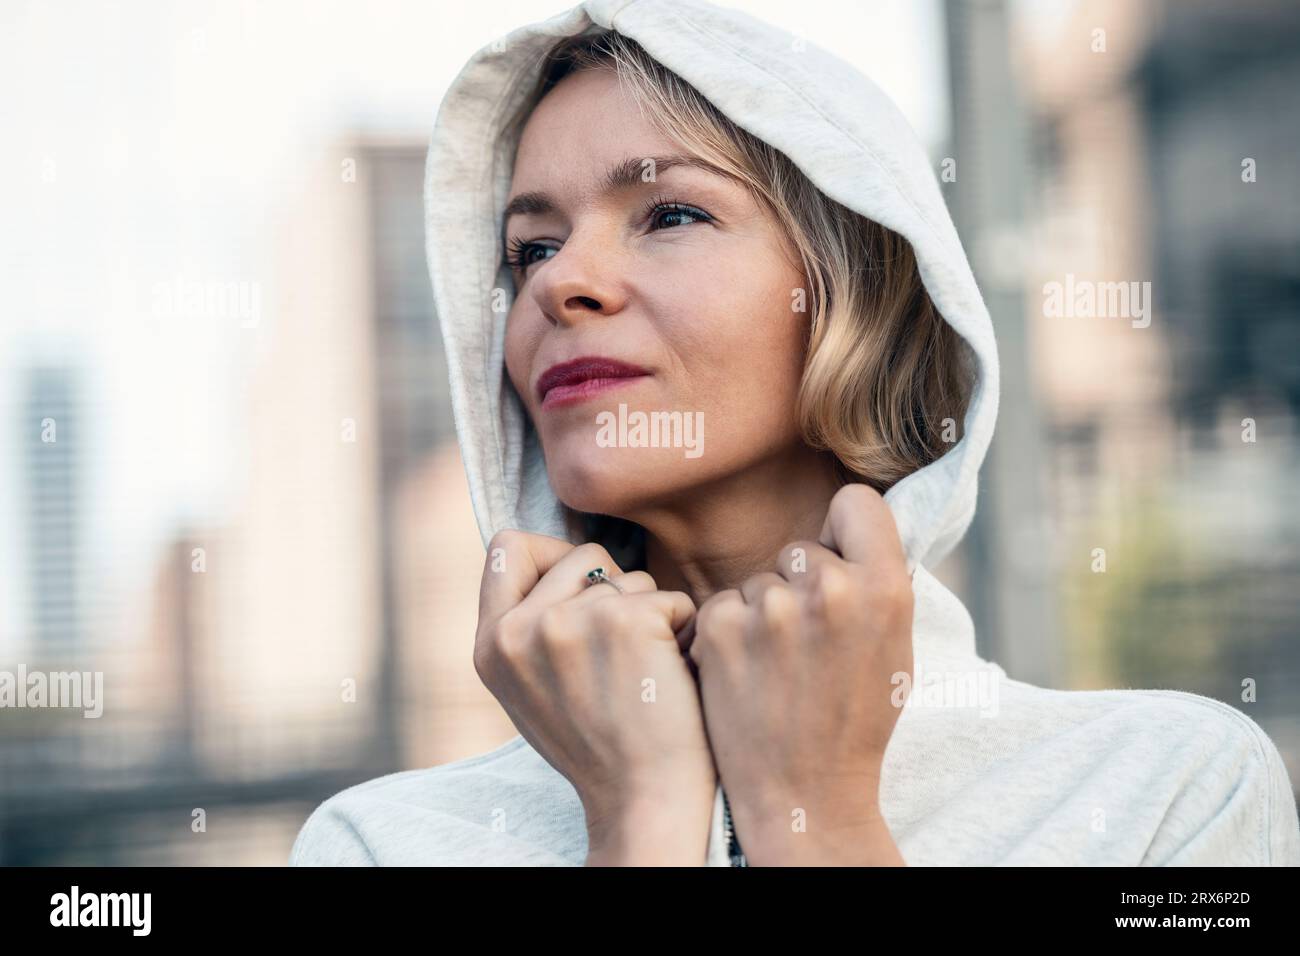 Contemplative woman wearing hooded shirt Stock Photo